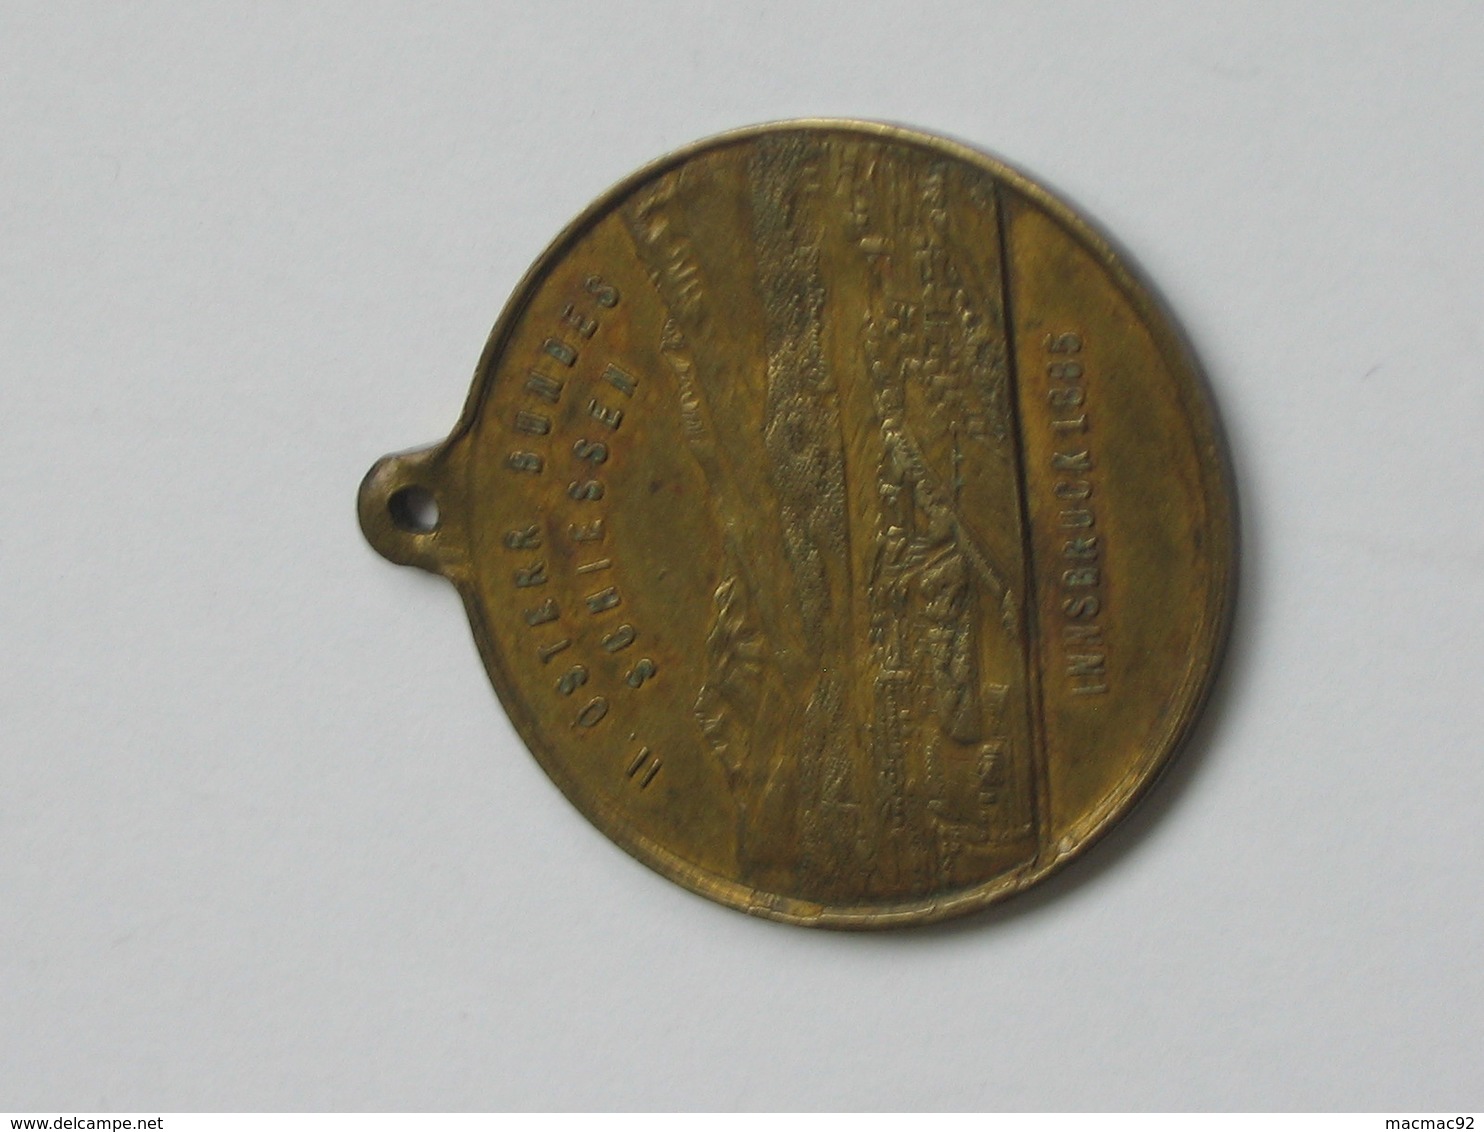 Médaille INNSBRUCK 1885 - II Oster Bundes Schiessen - Ub Aug Und Hand Fûrrs Vaterland   **** EN ACHAT IMMEDIAT **** - Professionnels/De Société